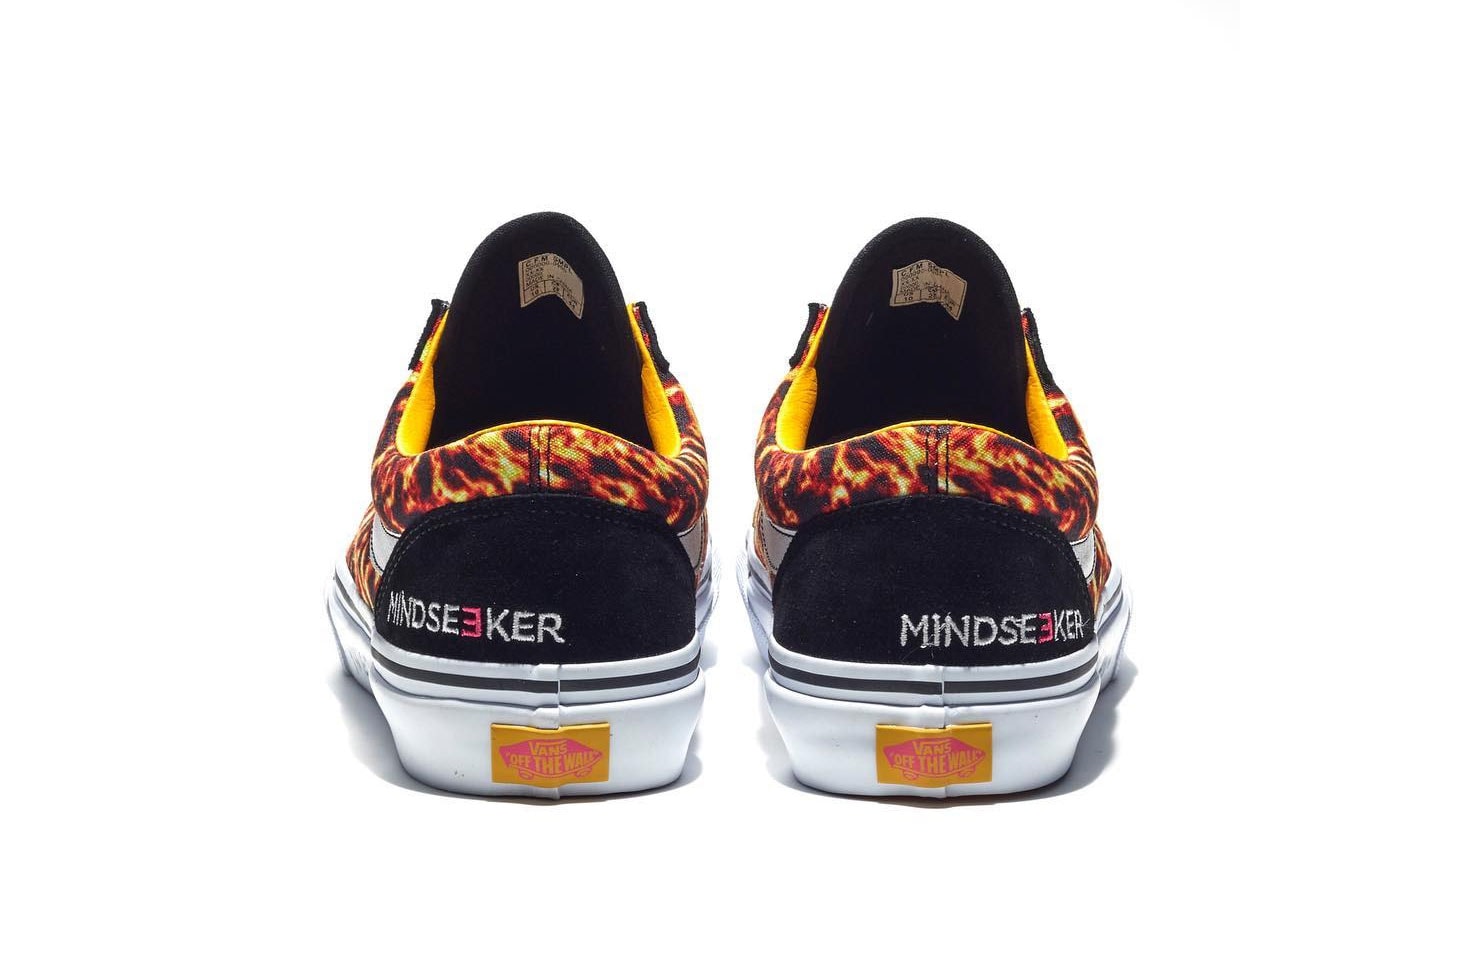 Mindseeker Vans Footwear Release Info old skool sneakers skateboarding 80s flames lightening graphics print drop release date info november 3 4 2018 fall winter japan